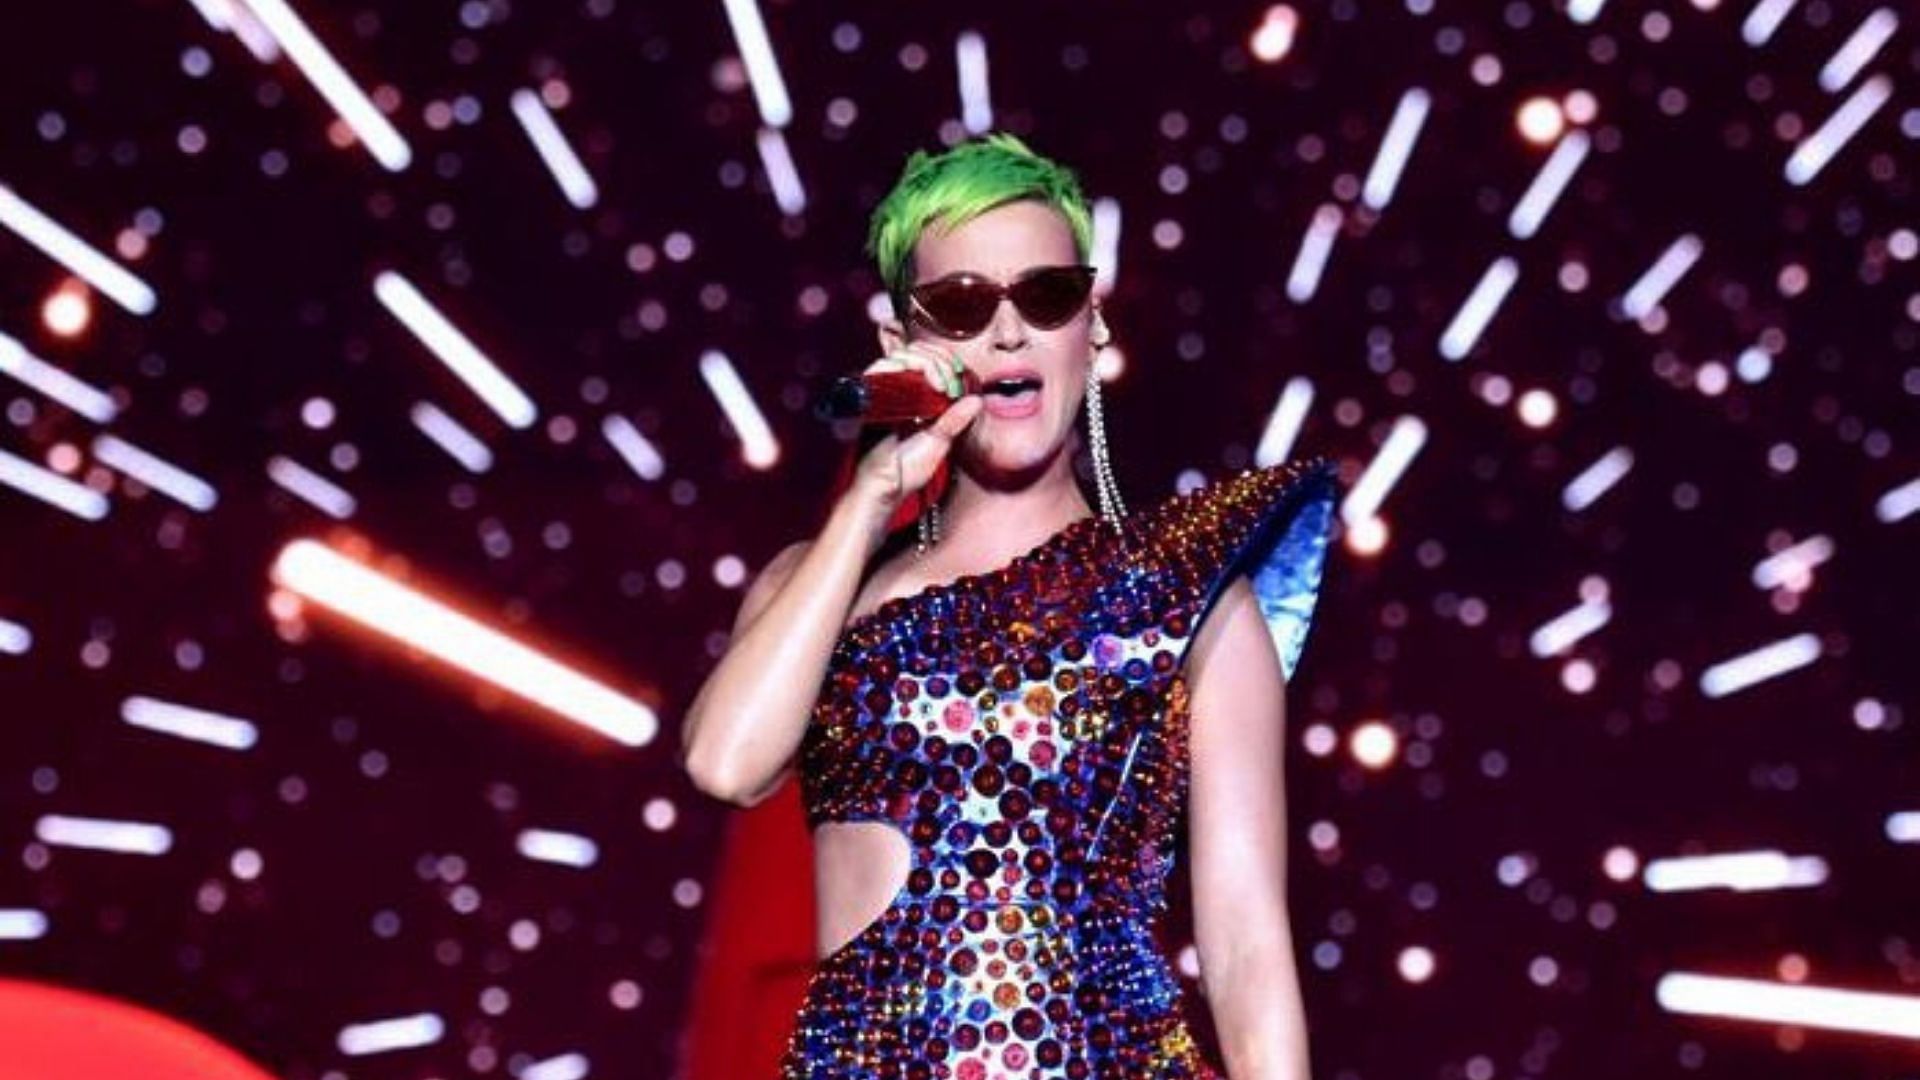 Katy Perry will perform in Mumbai in November.